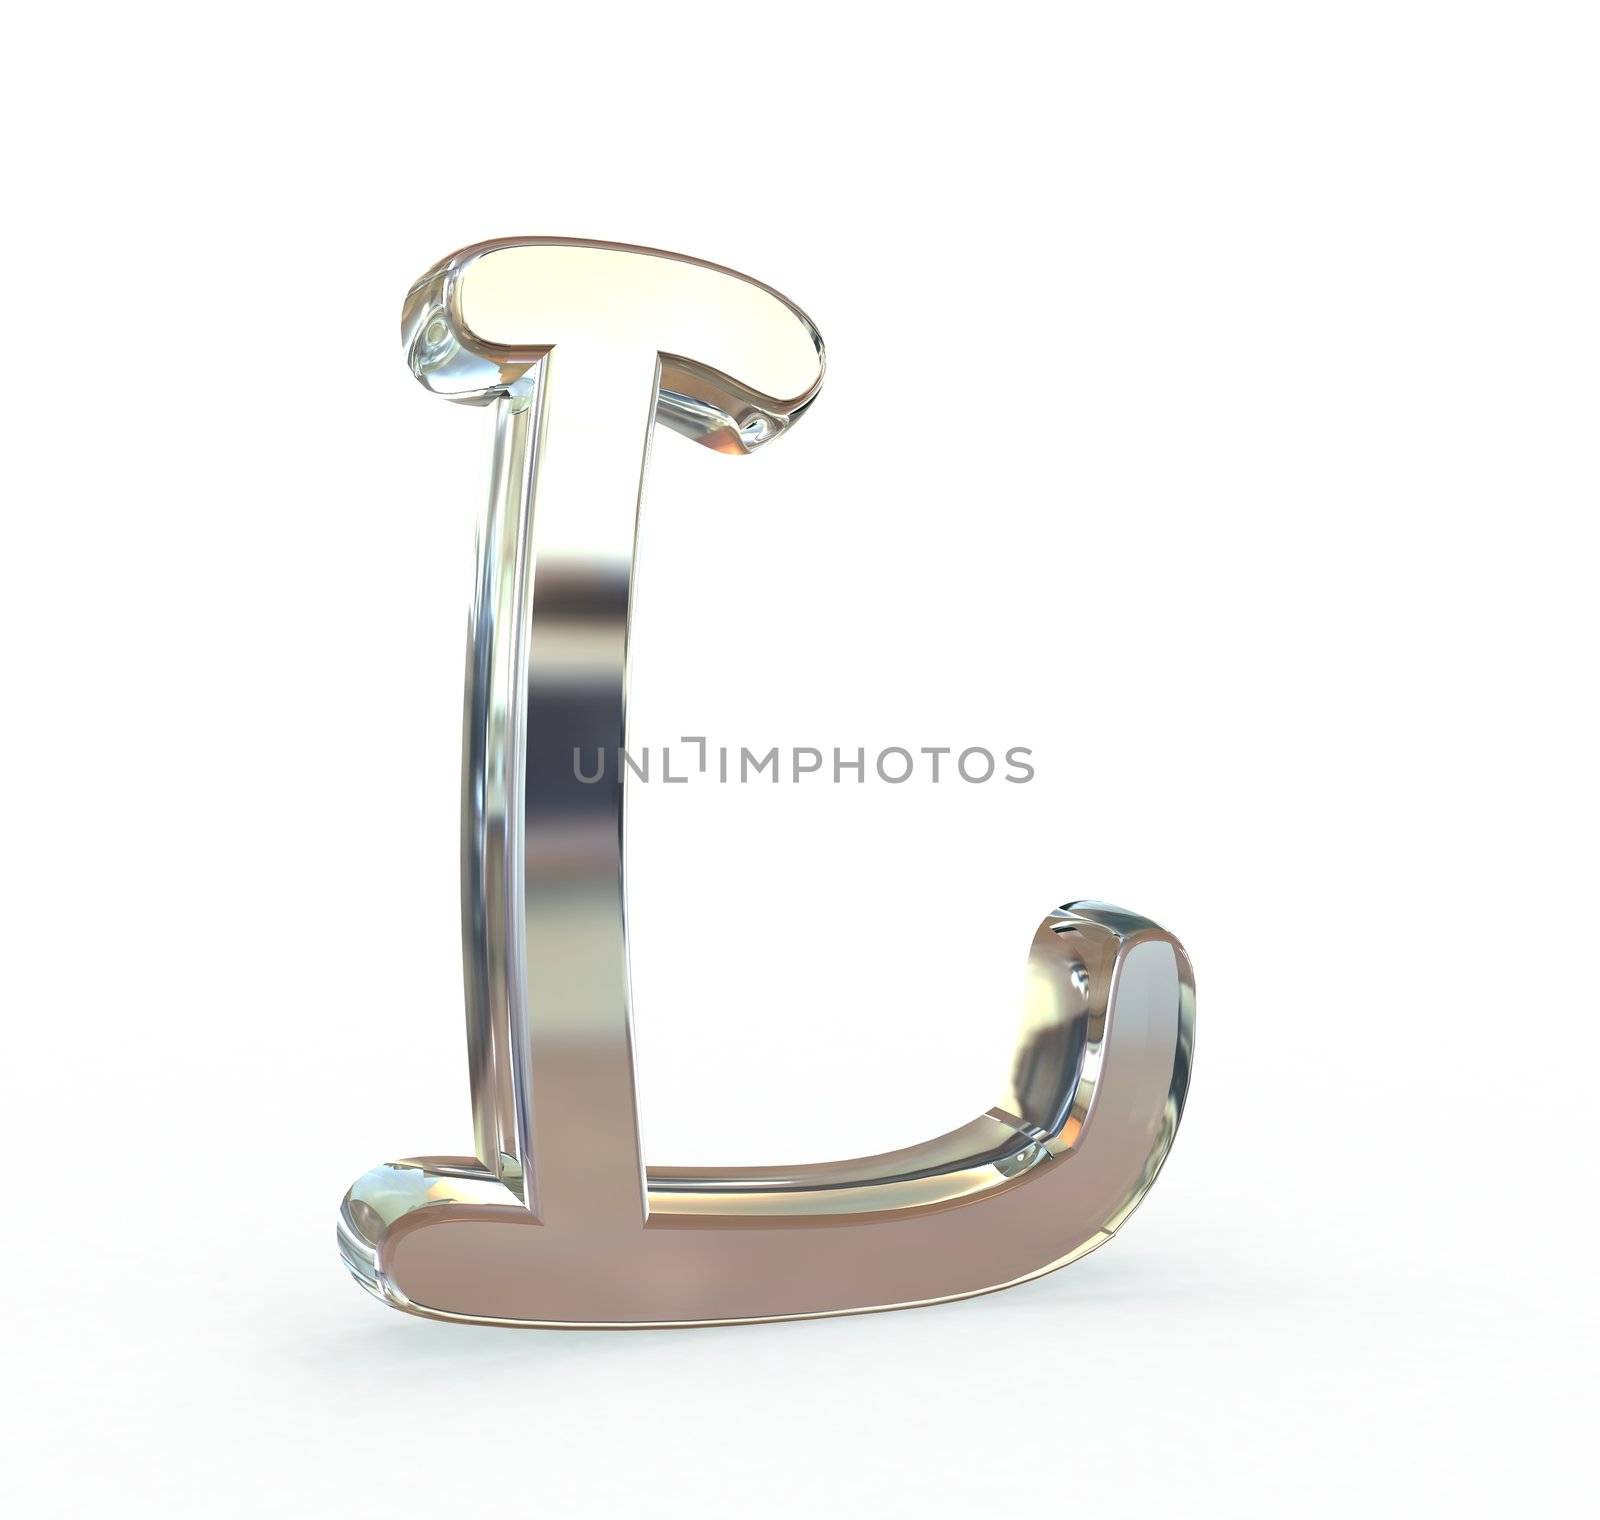 3d metal alphabet symbol.(isolated.)